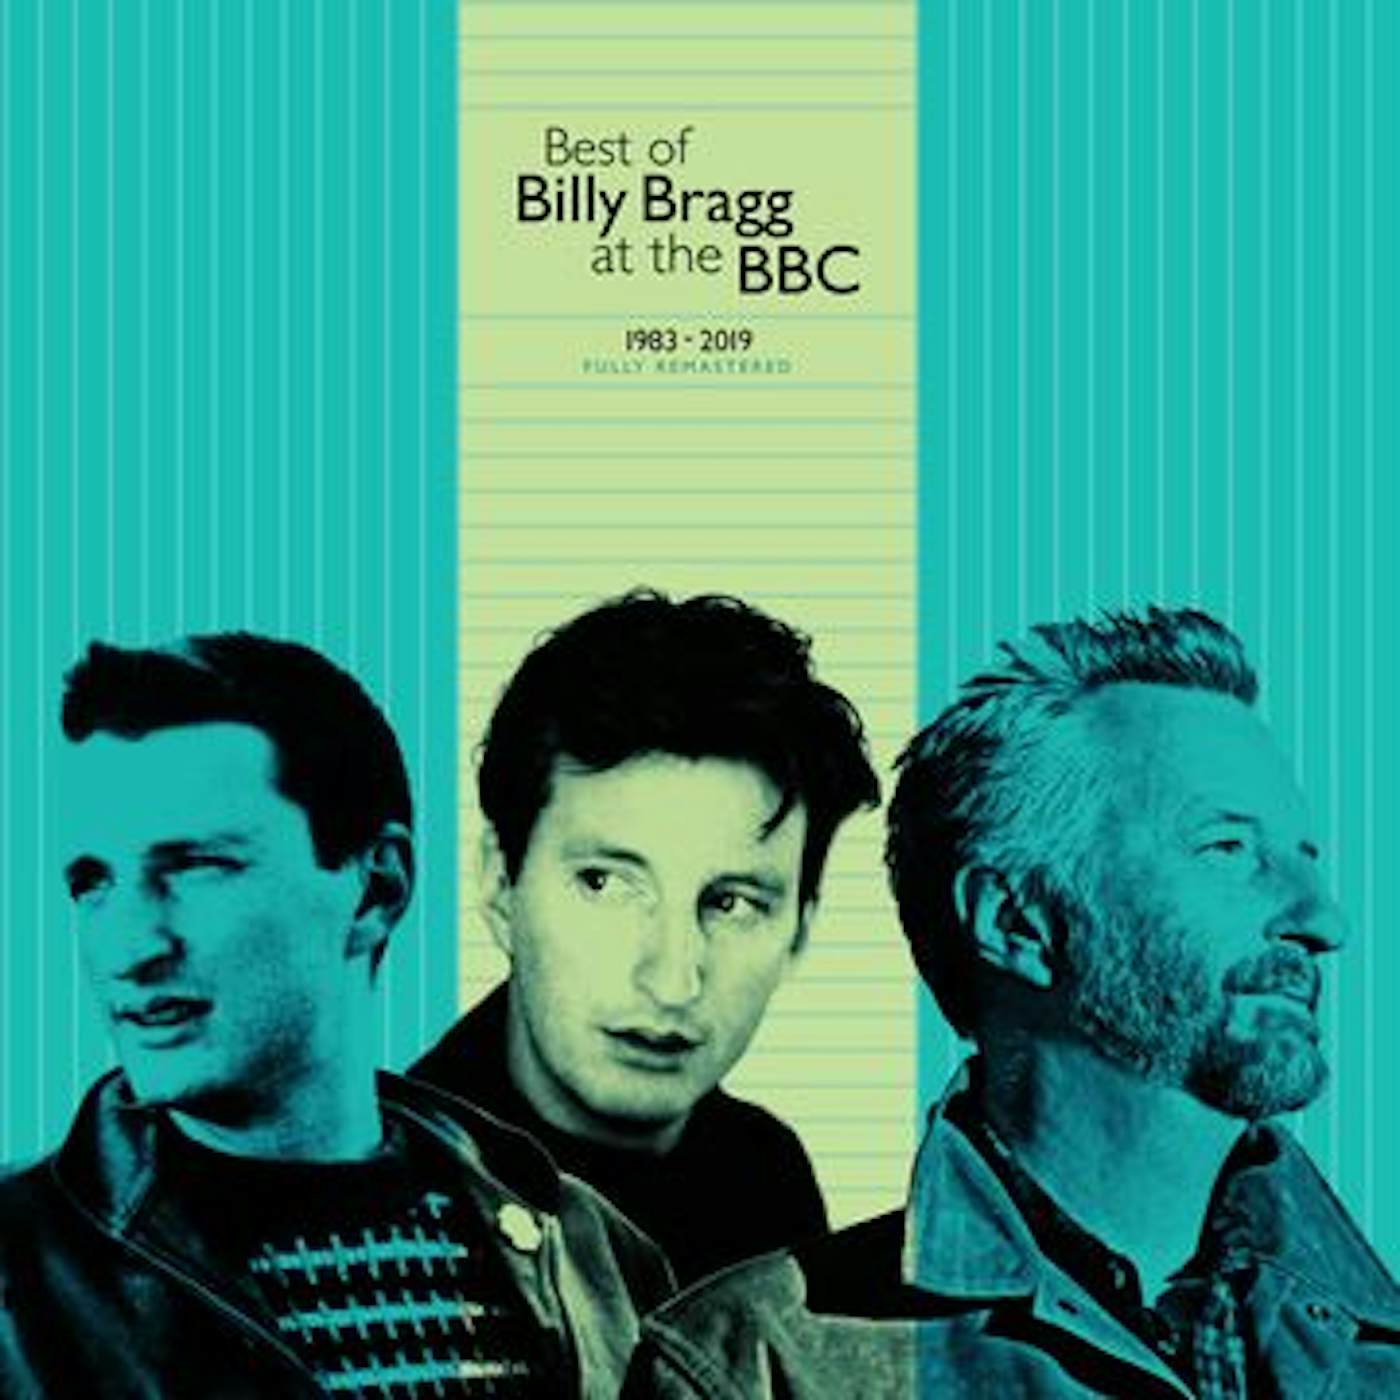 BEST OF BILLY BRAGG AT THE BBC 1983-2019 CD